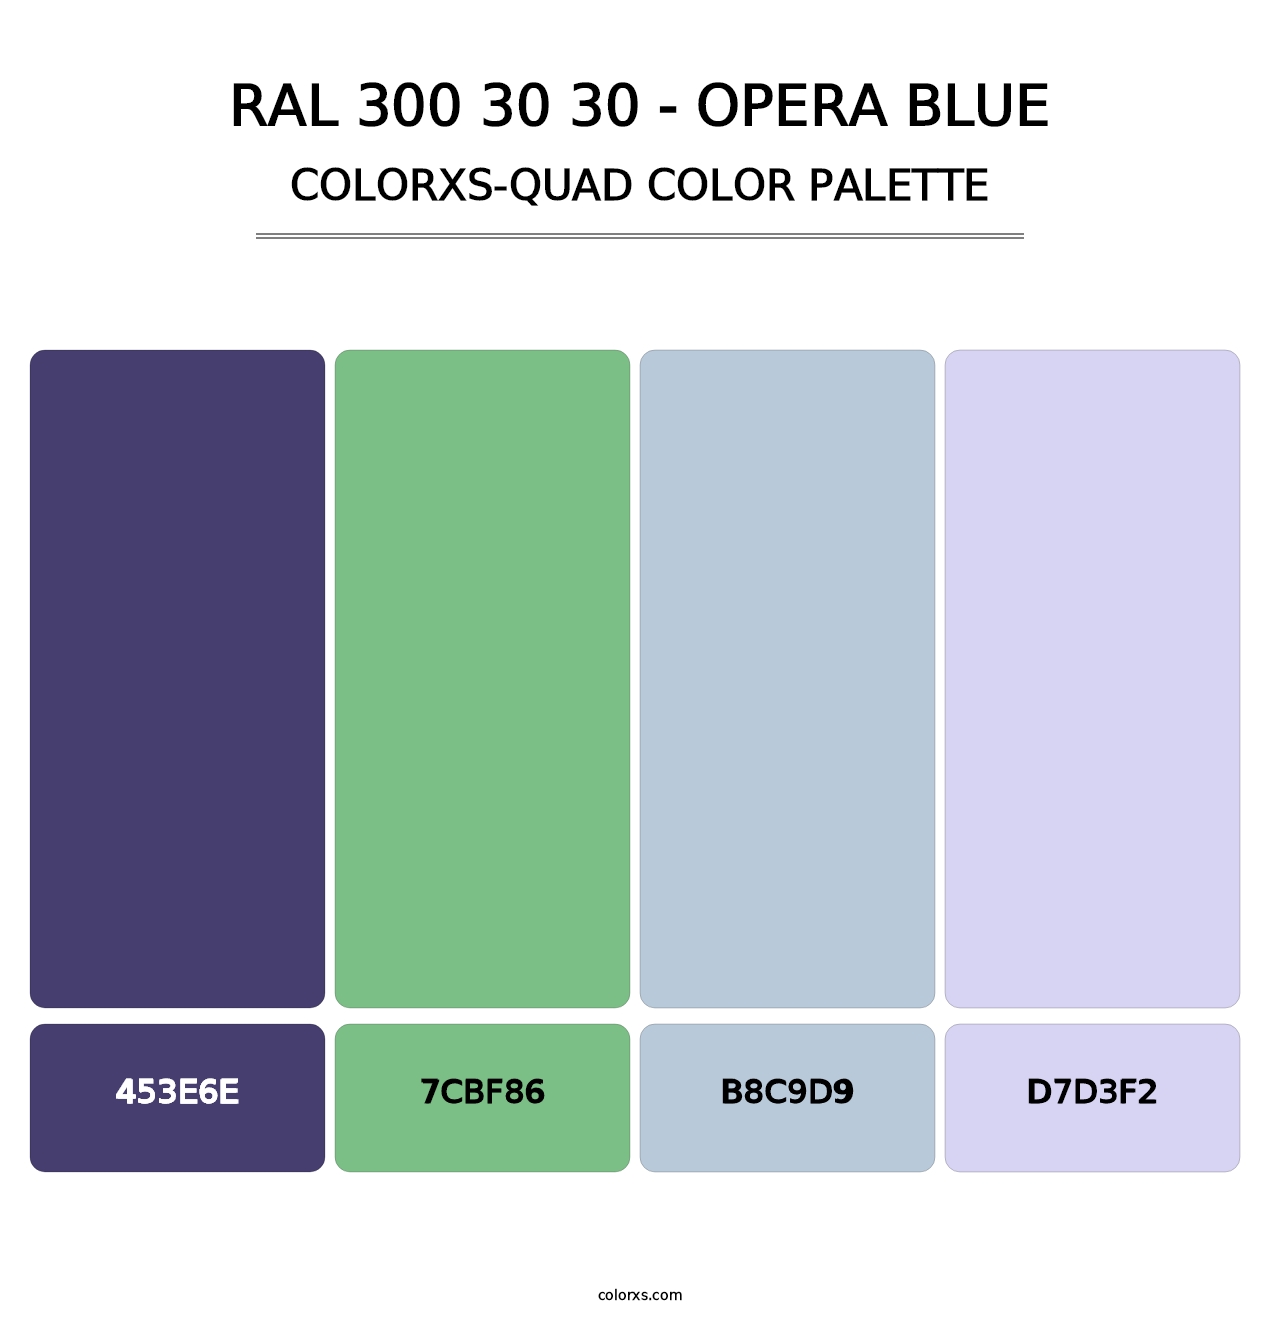 RAL 300 30 30 - Opera Blue - Colorxs Quad Palette